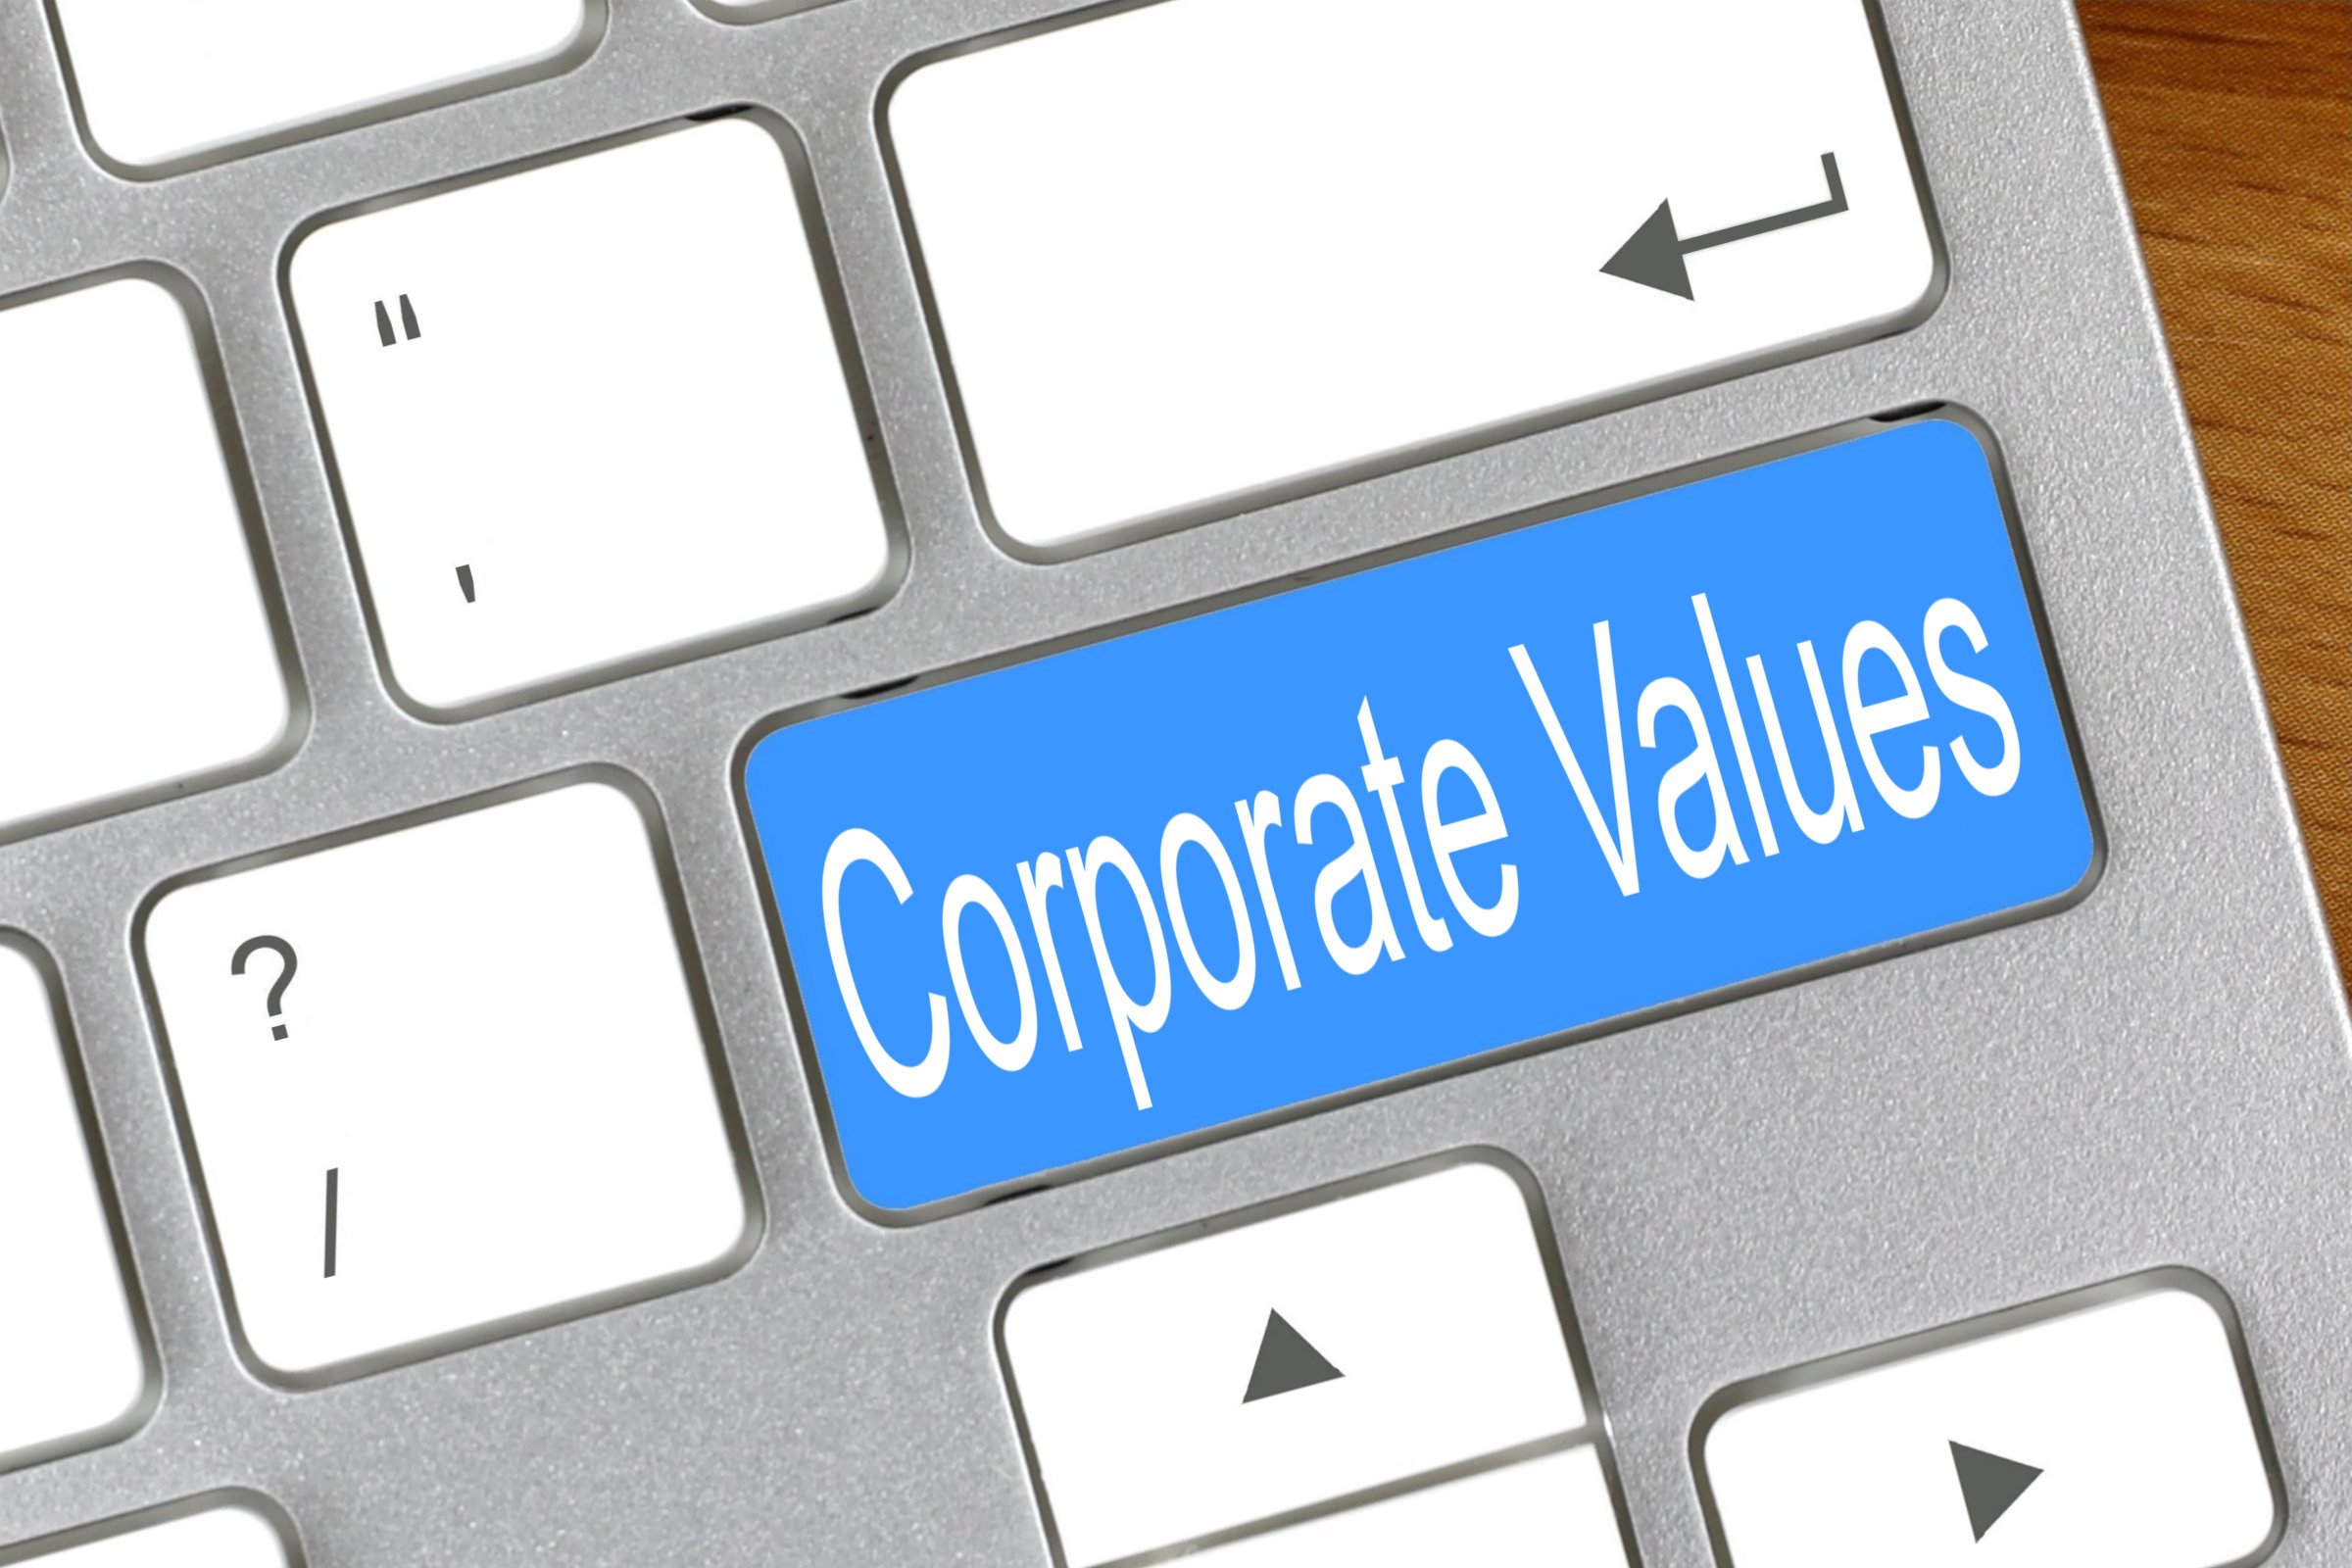 corporate values